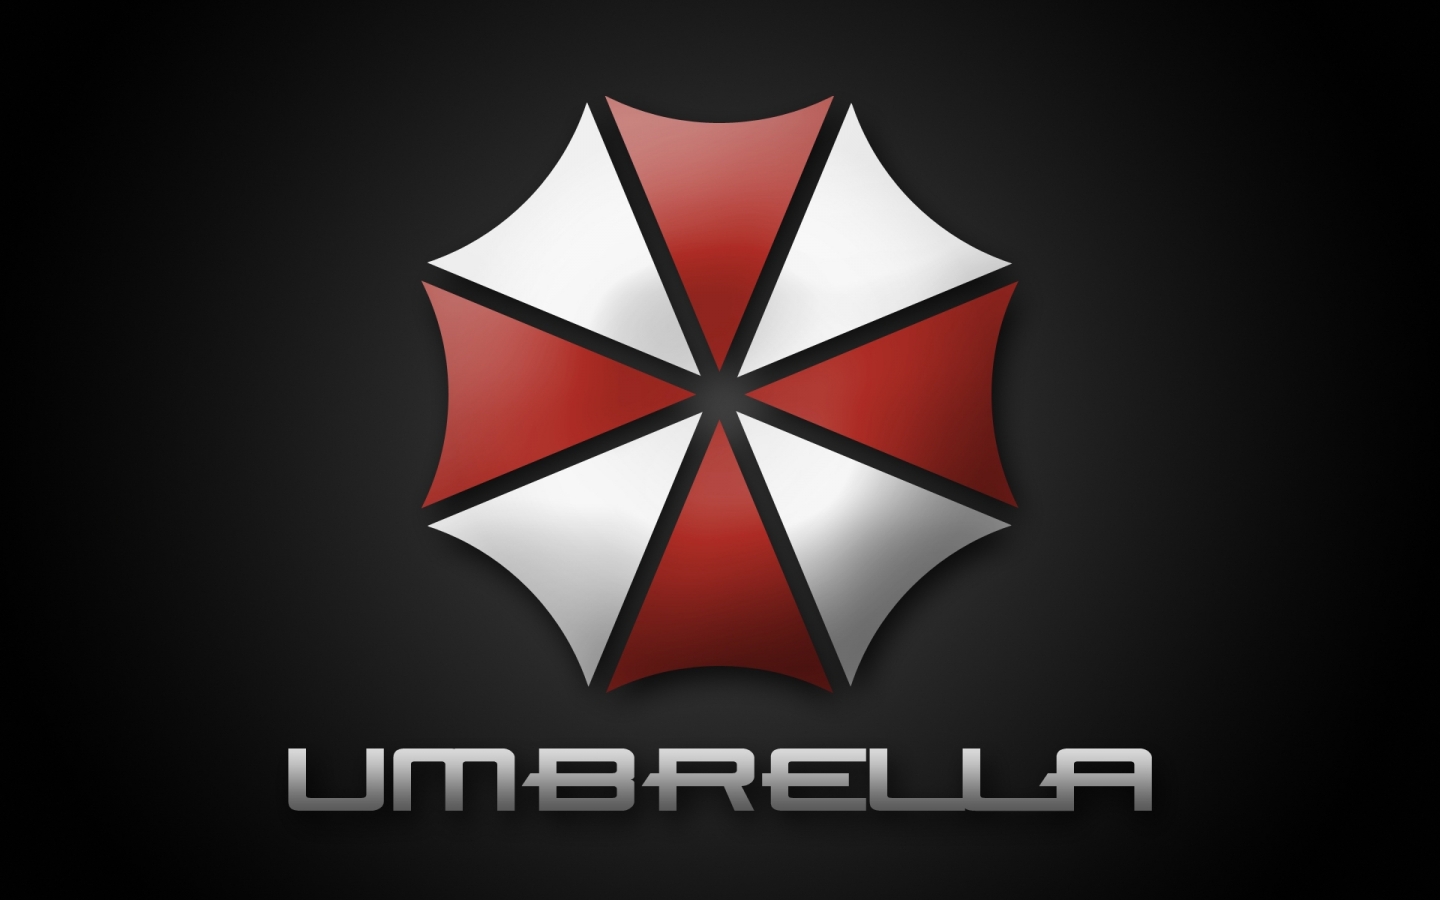 Umbrella for 1440 x 900 widescreen resolution